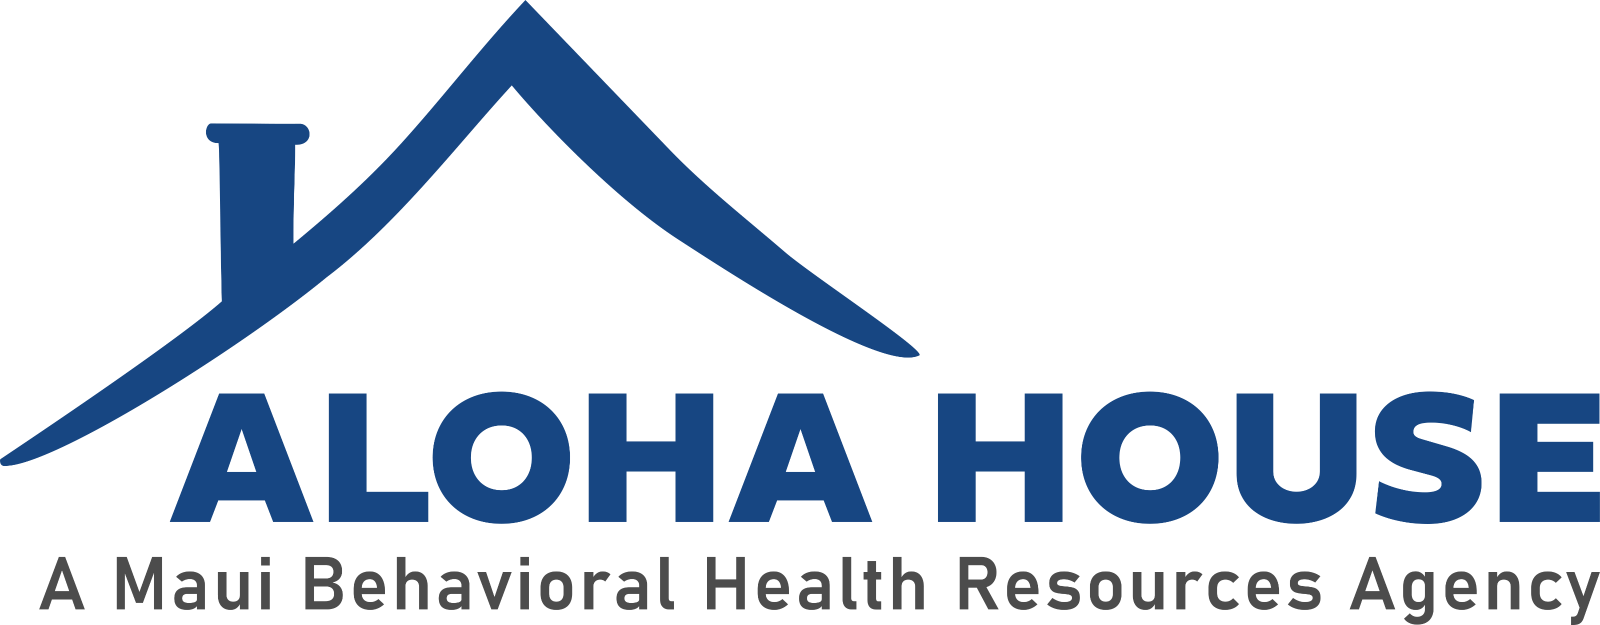 aloha-logo-midres-1200dpi.png